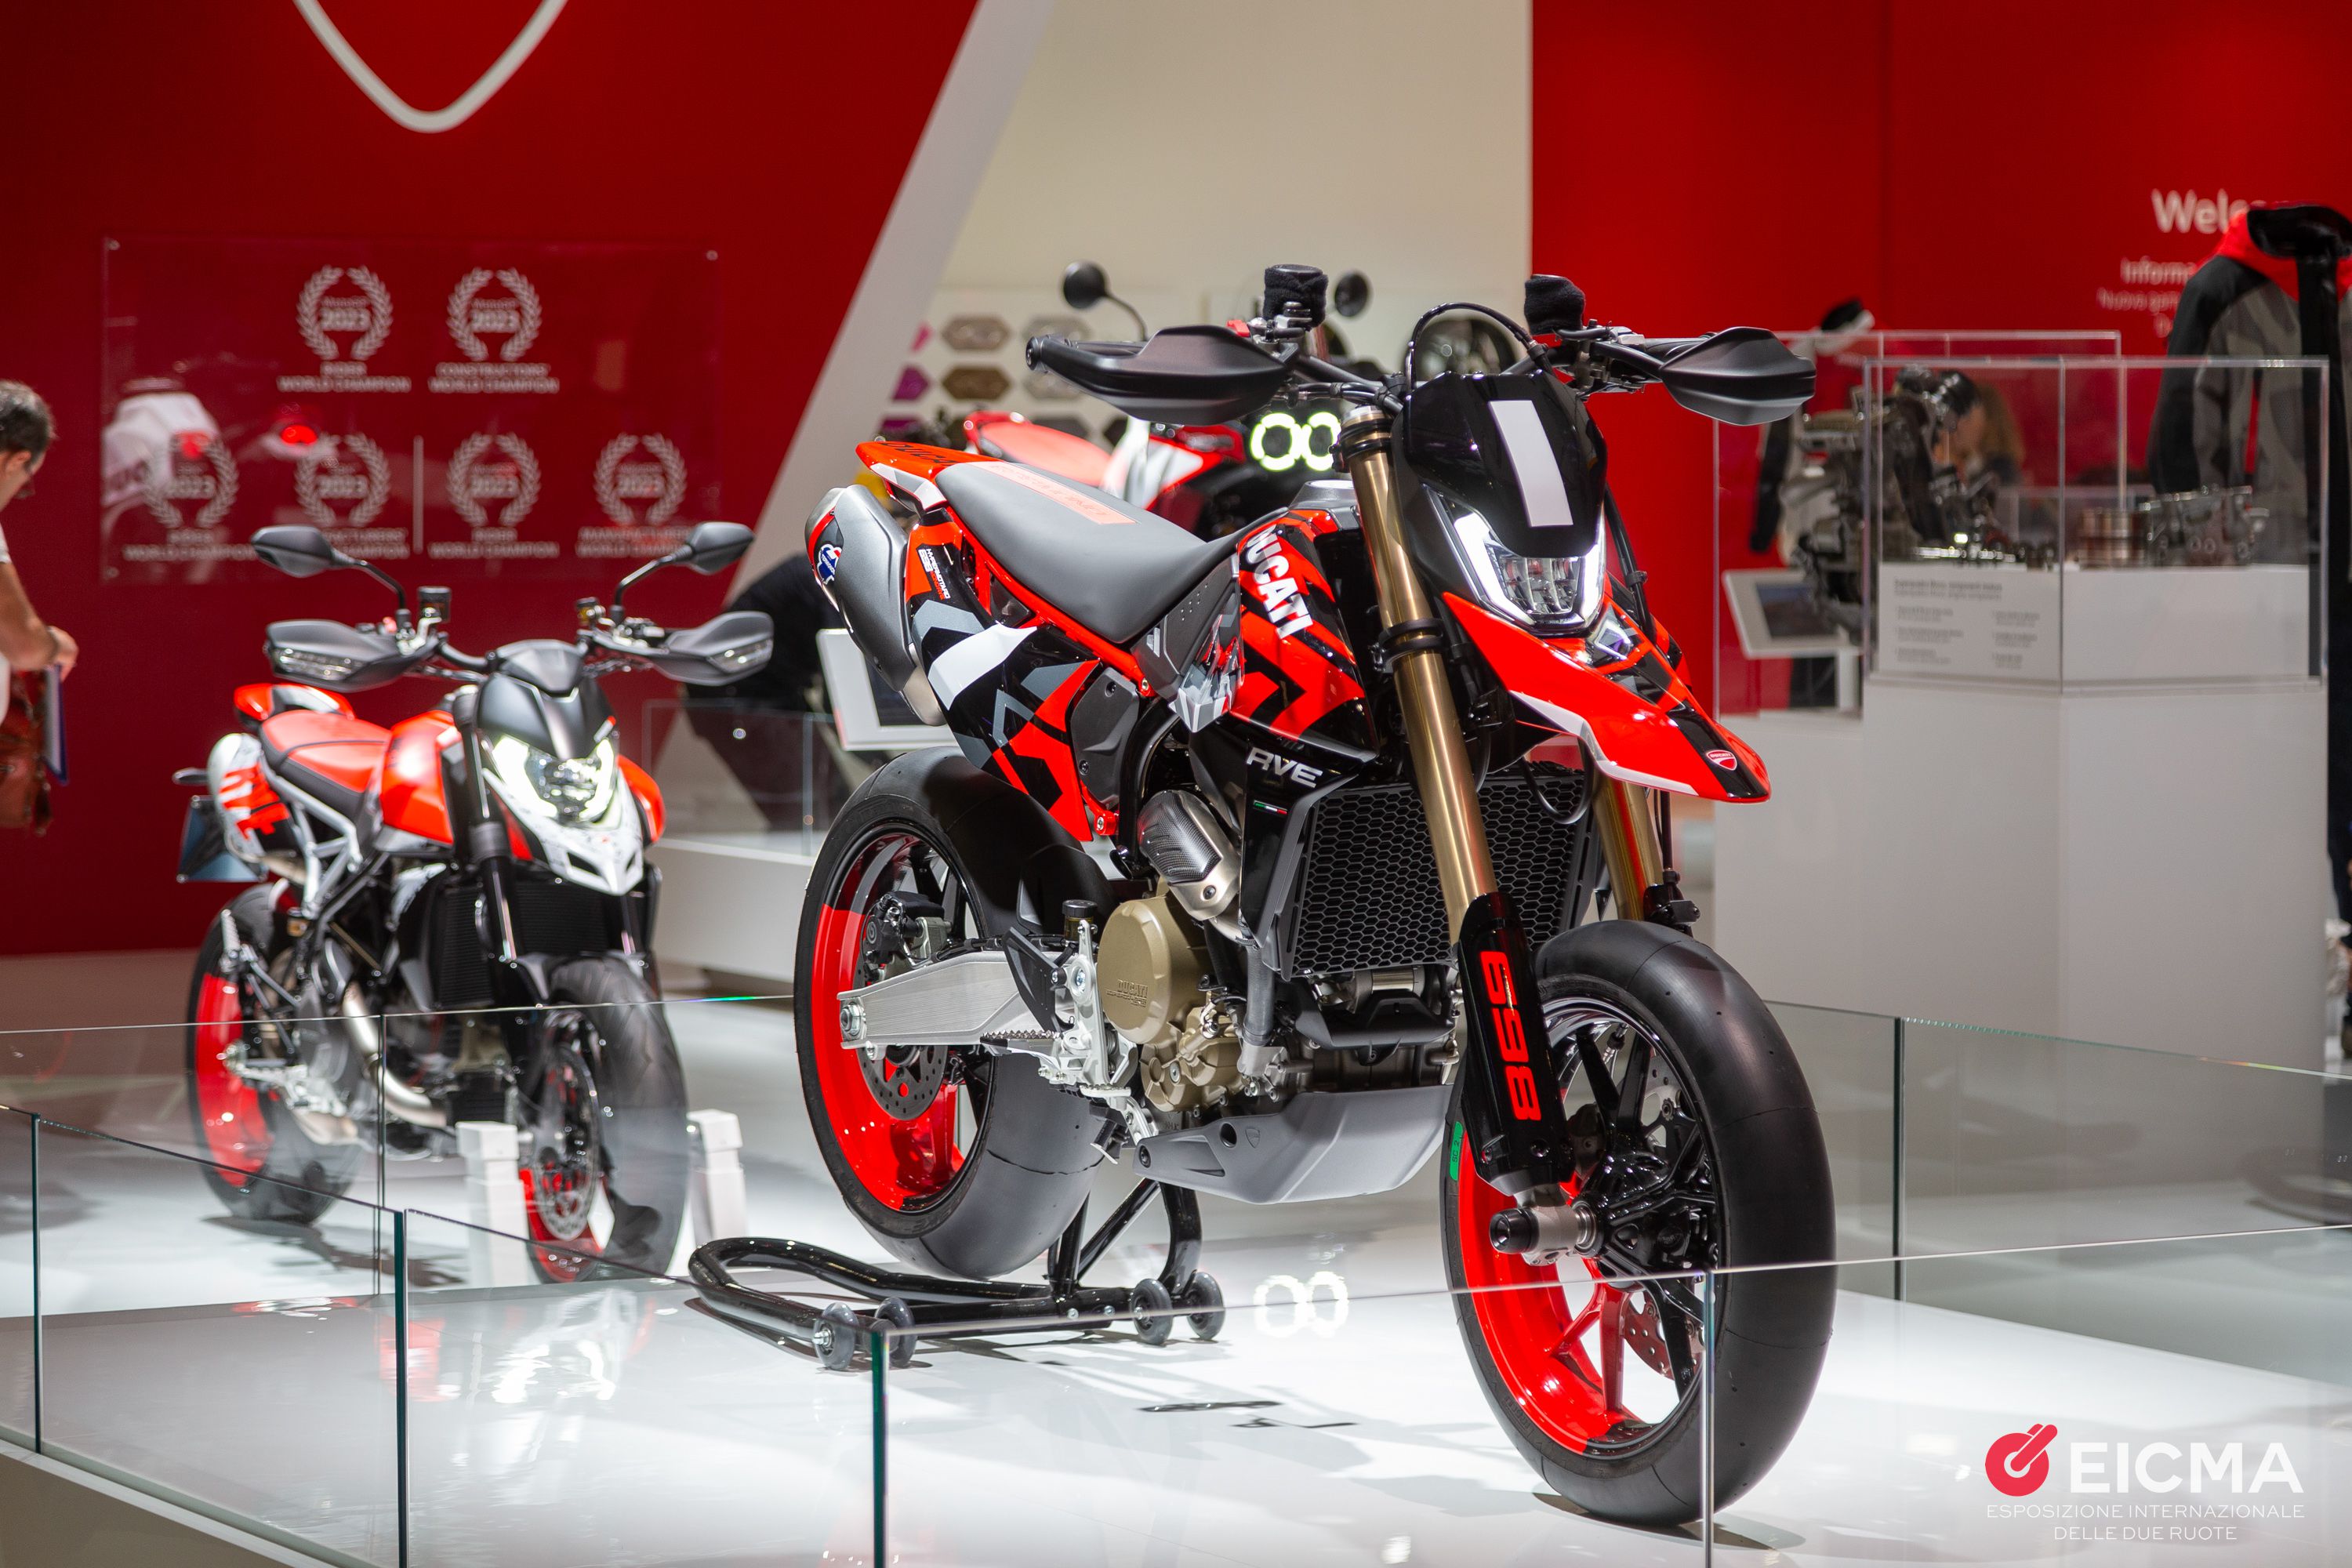 The Ducati Hypermotard 698 Mono RVE was the fans' choice. Courtesy EICMA